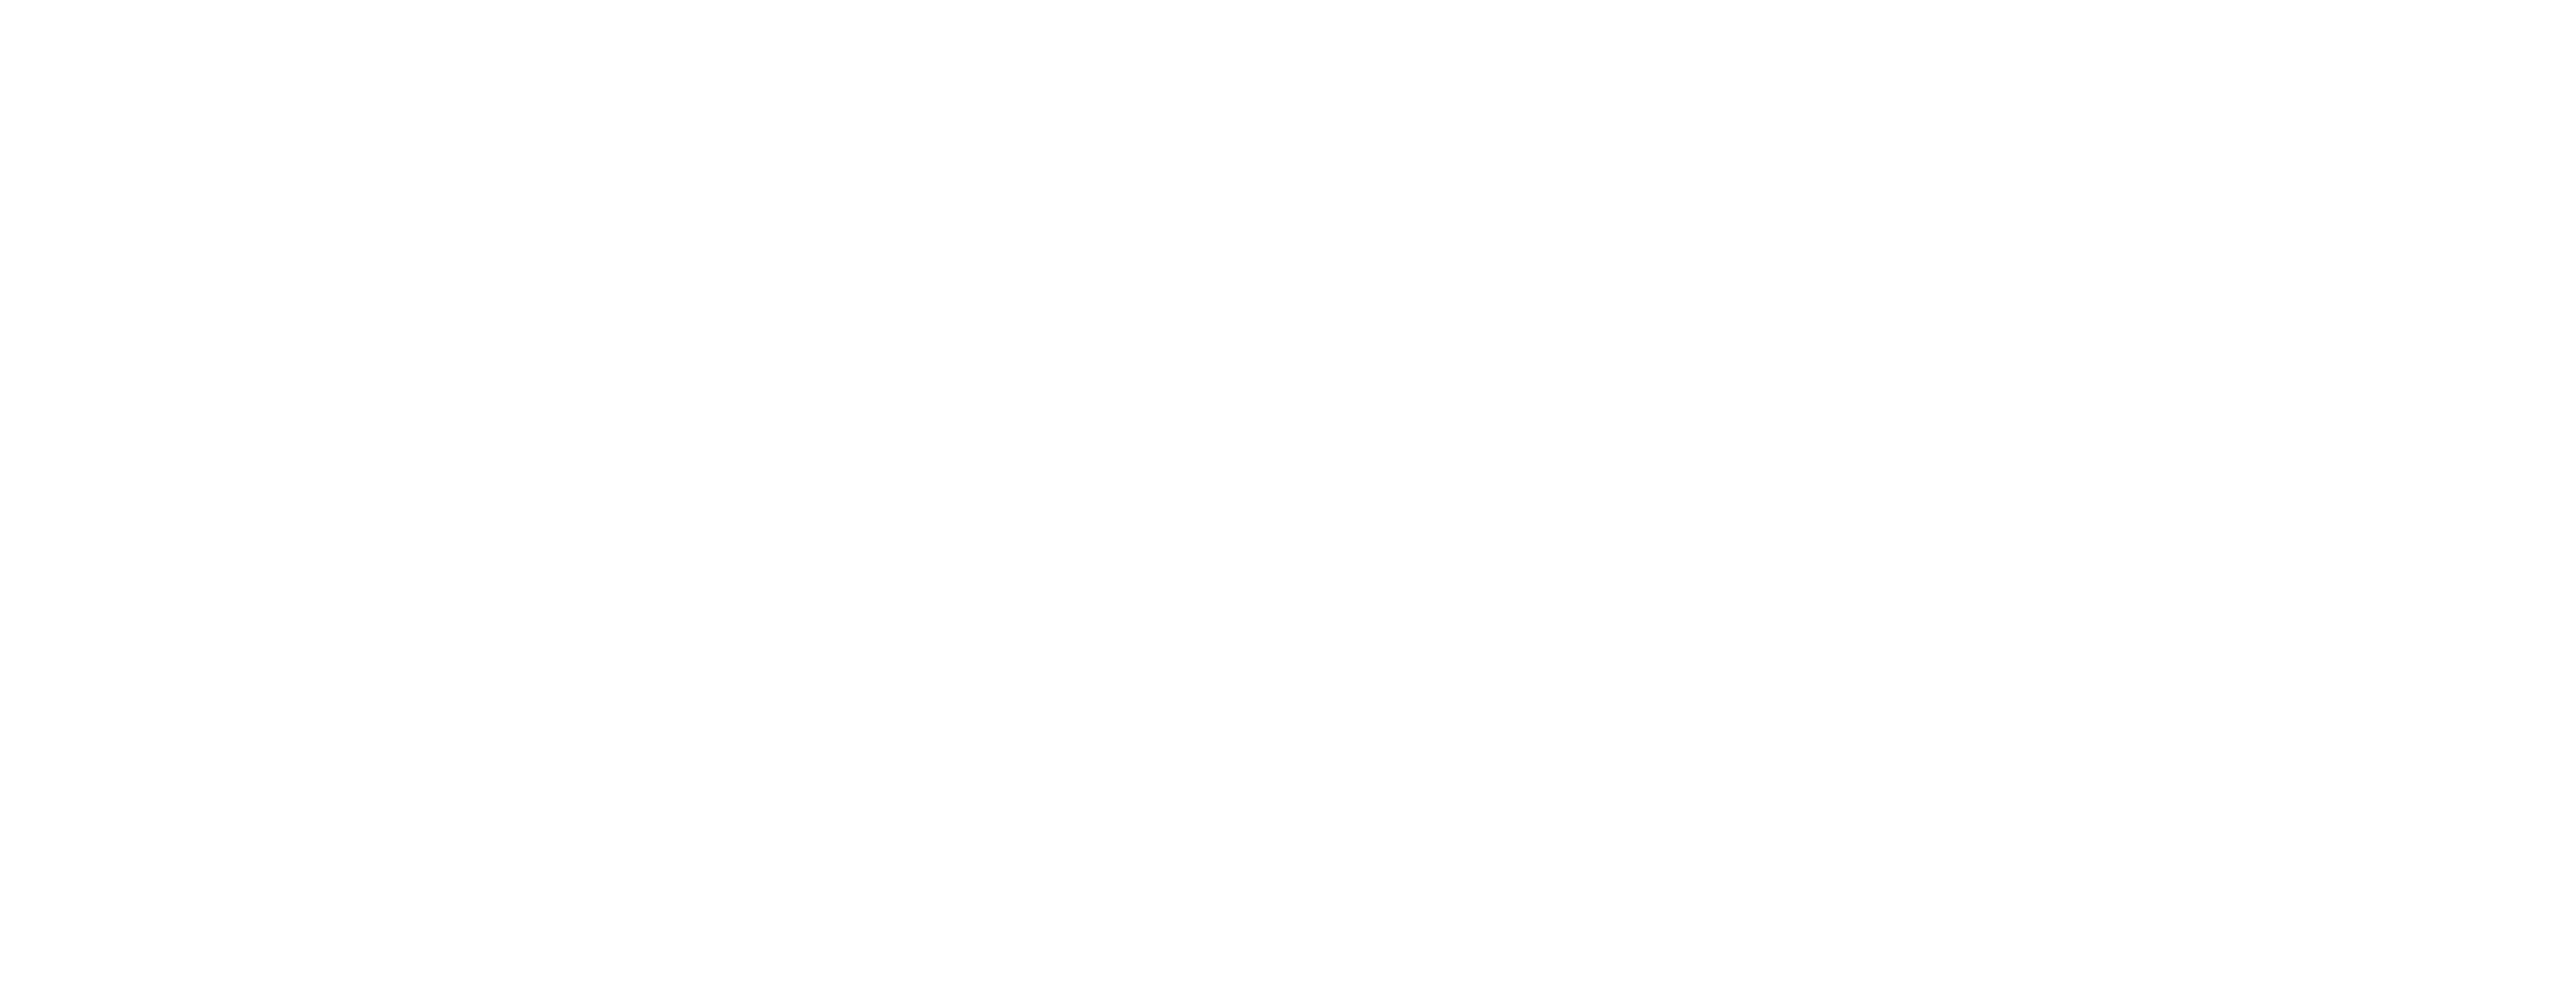 travis county wild fire coalition logo white